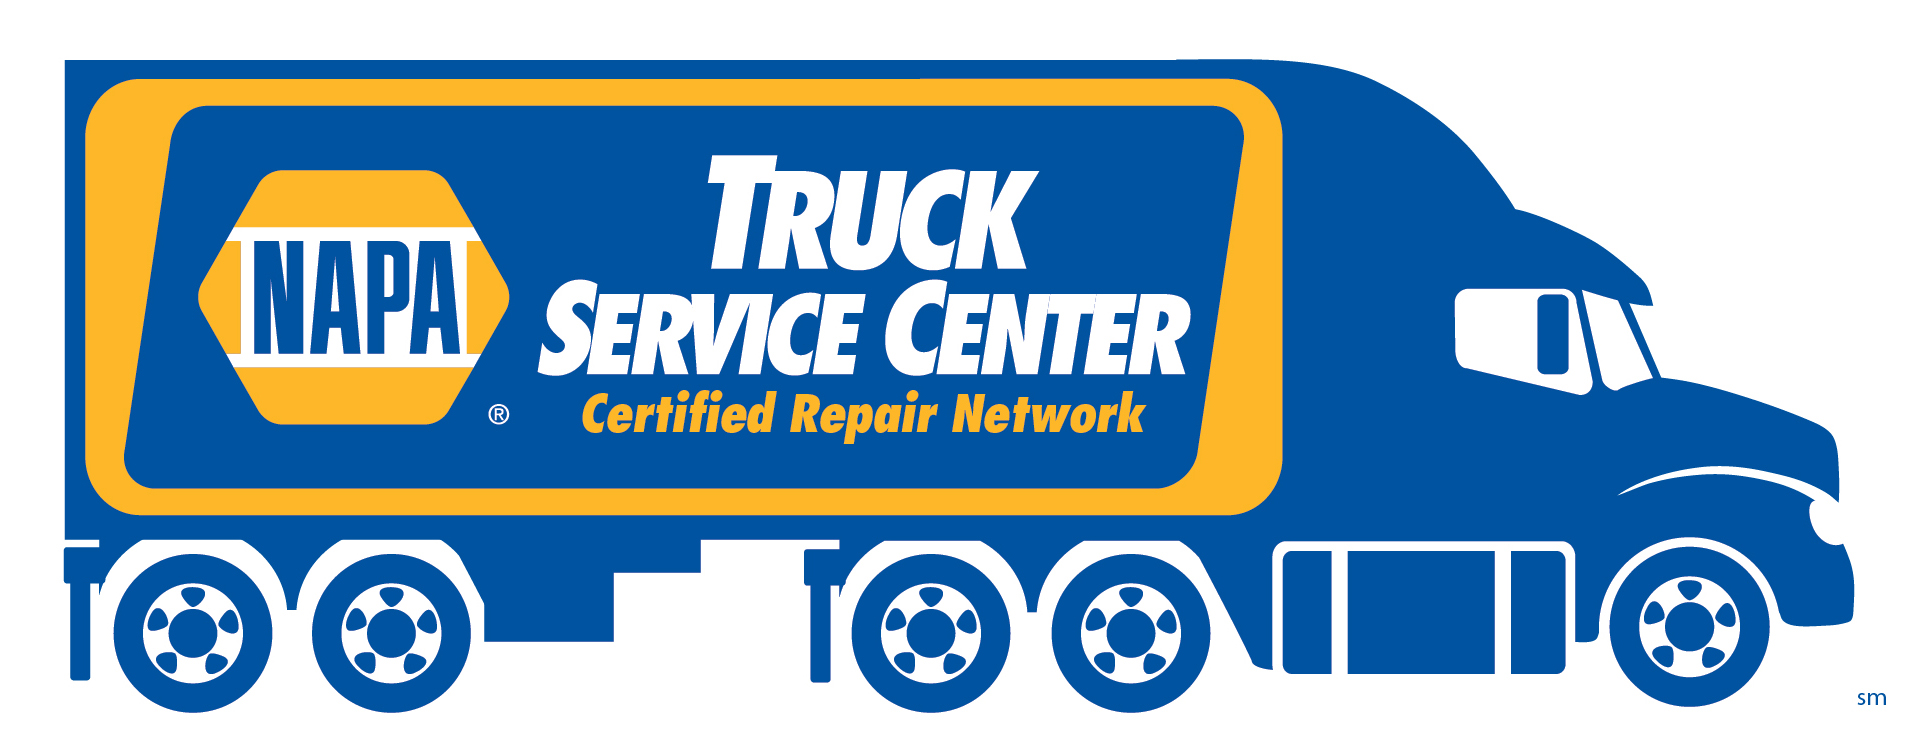 NAPA Truck Service Center Logo photo - 1